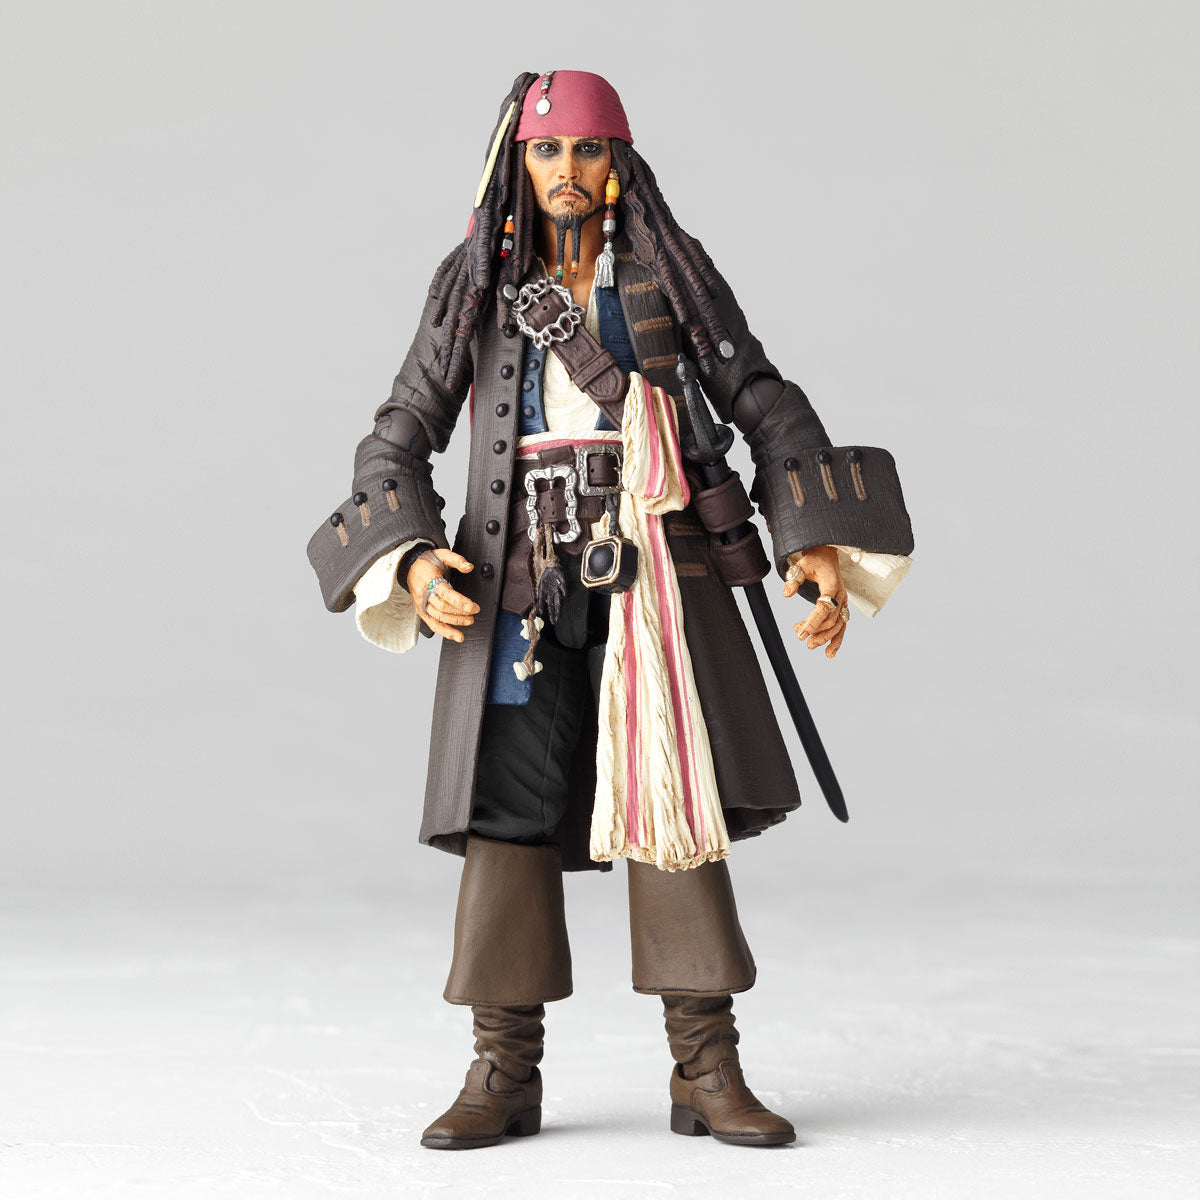 Revoltech "Pirates of the Caribbean" Jack Sparrow